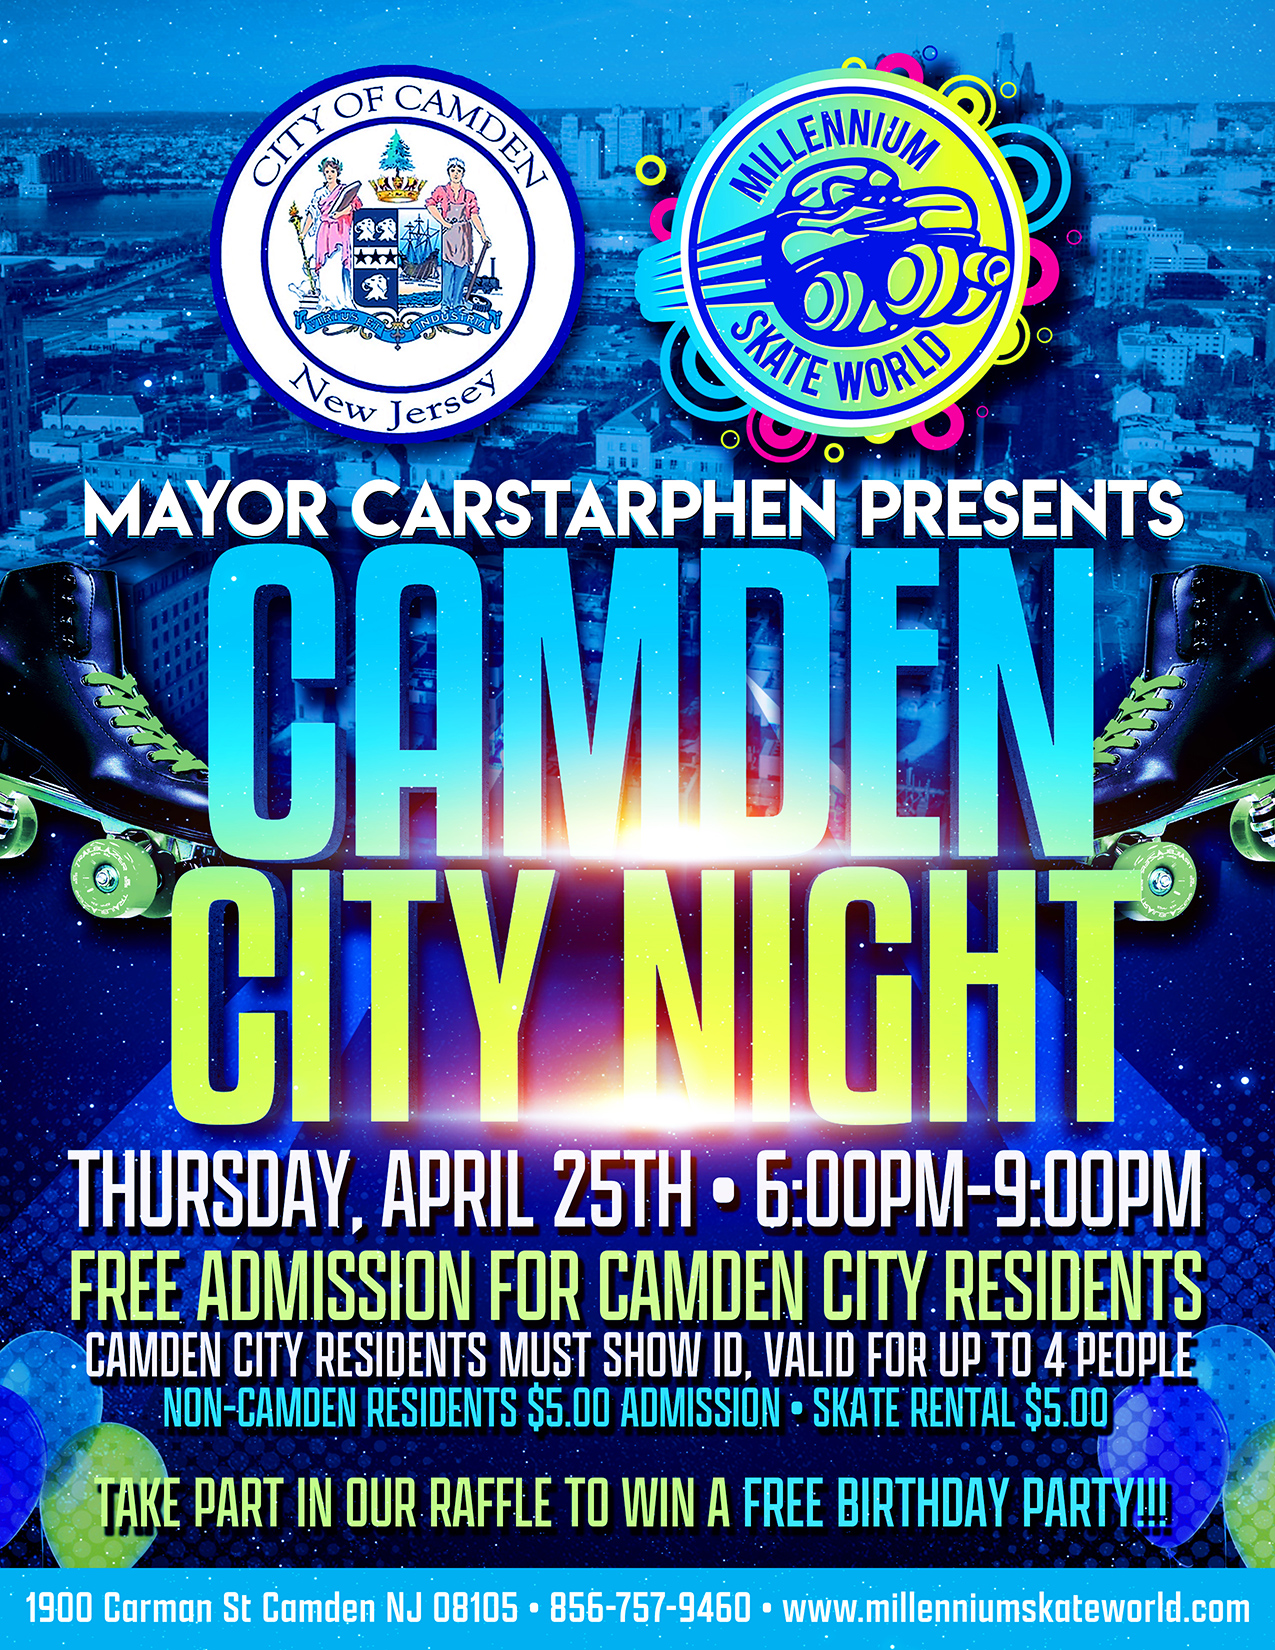 Camden City Night